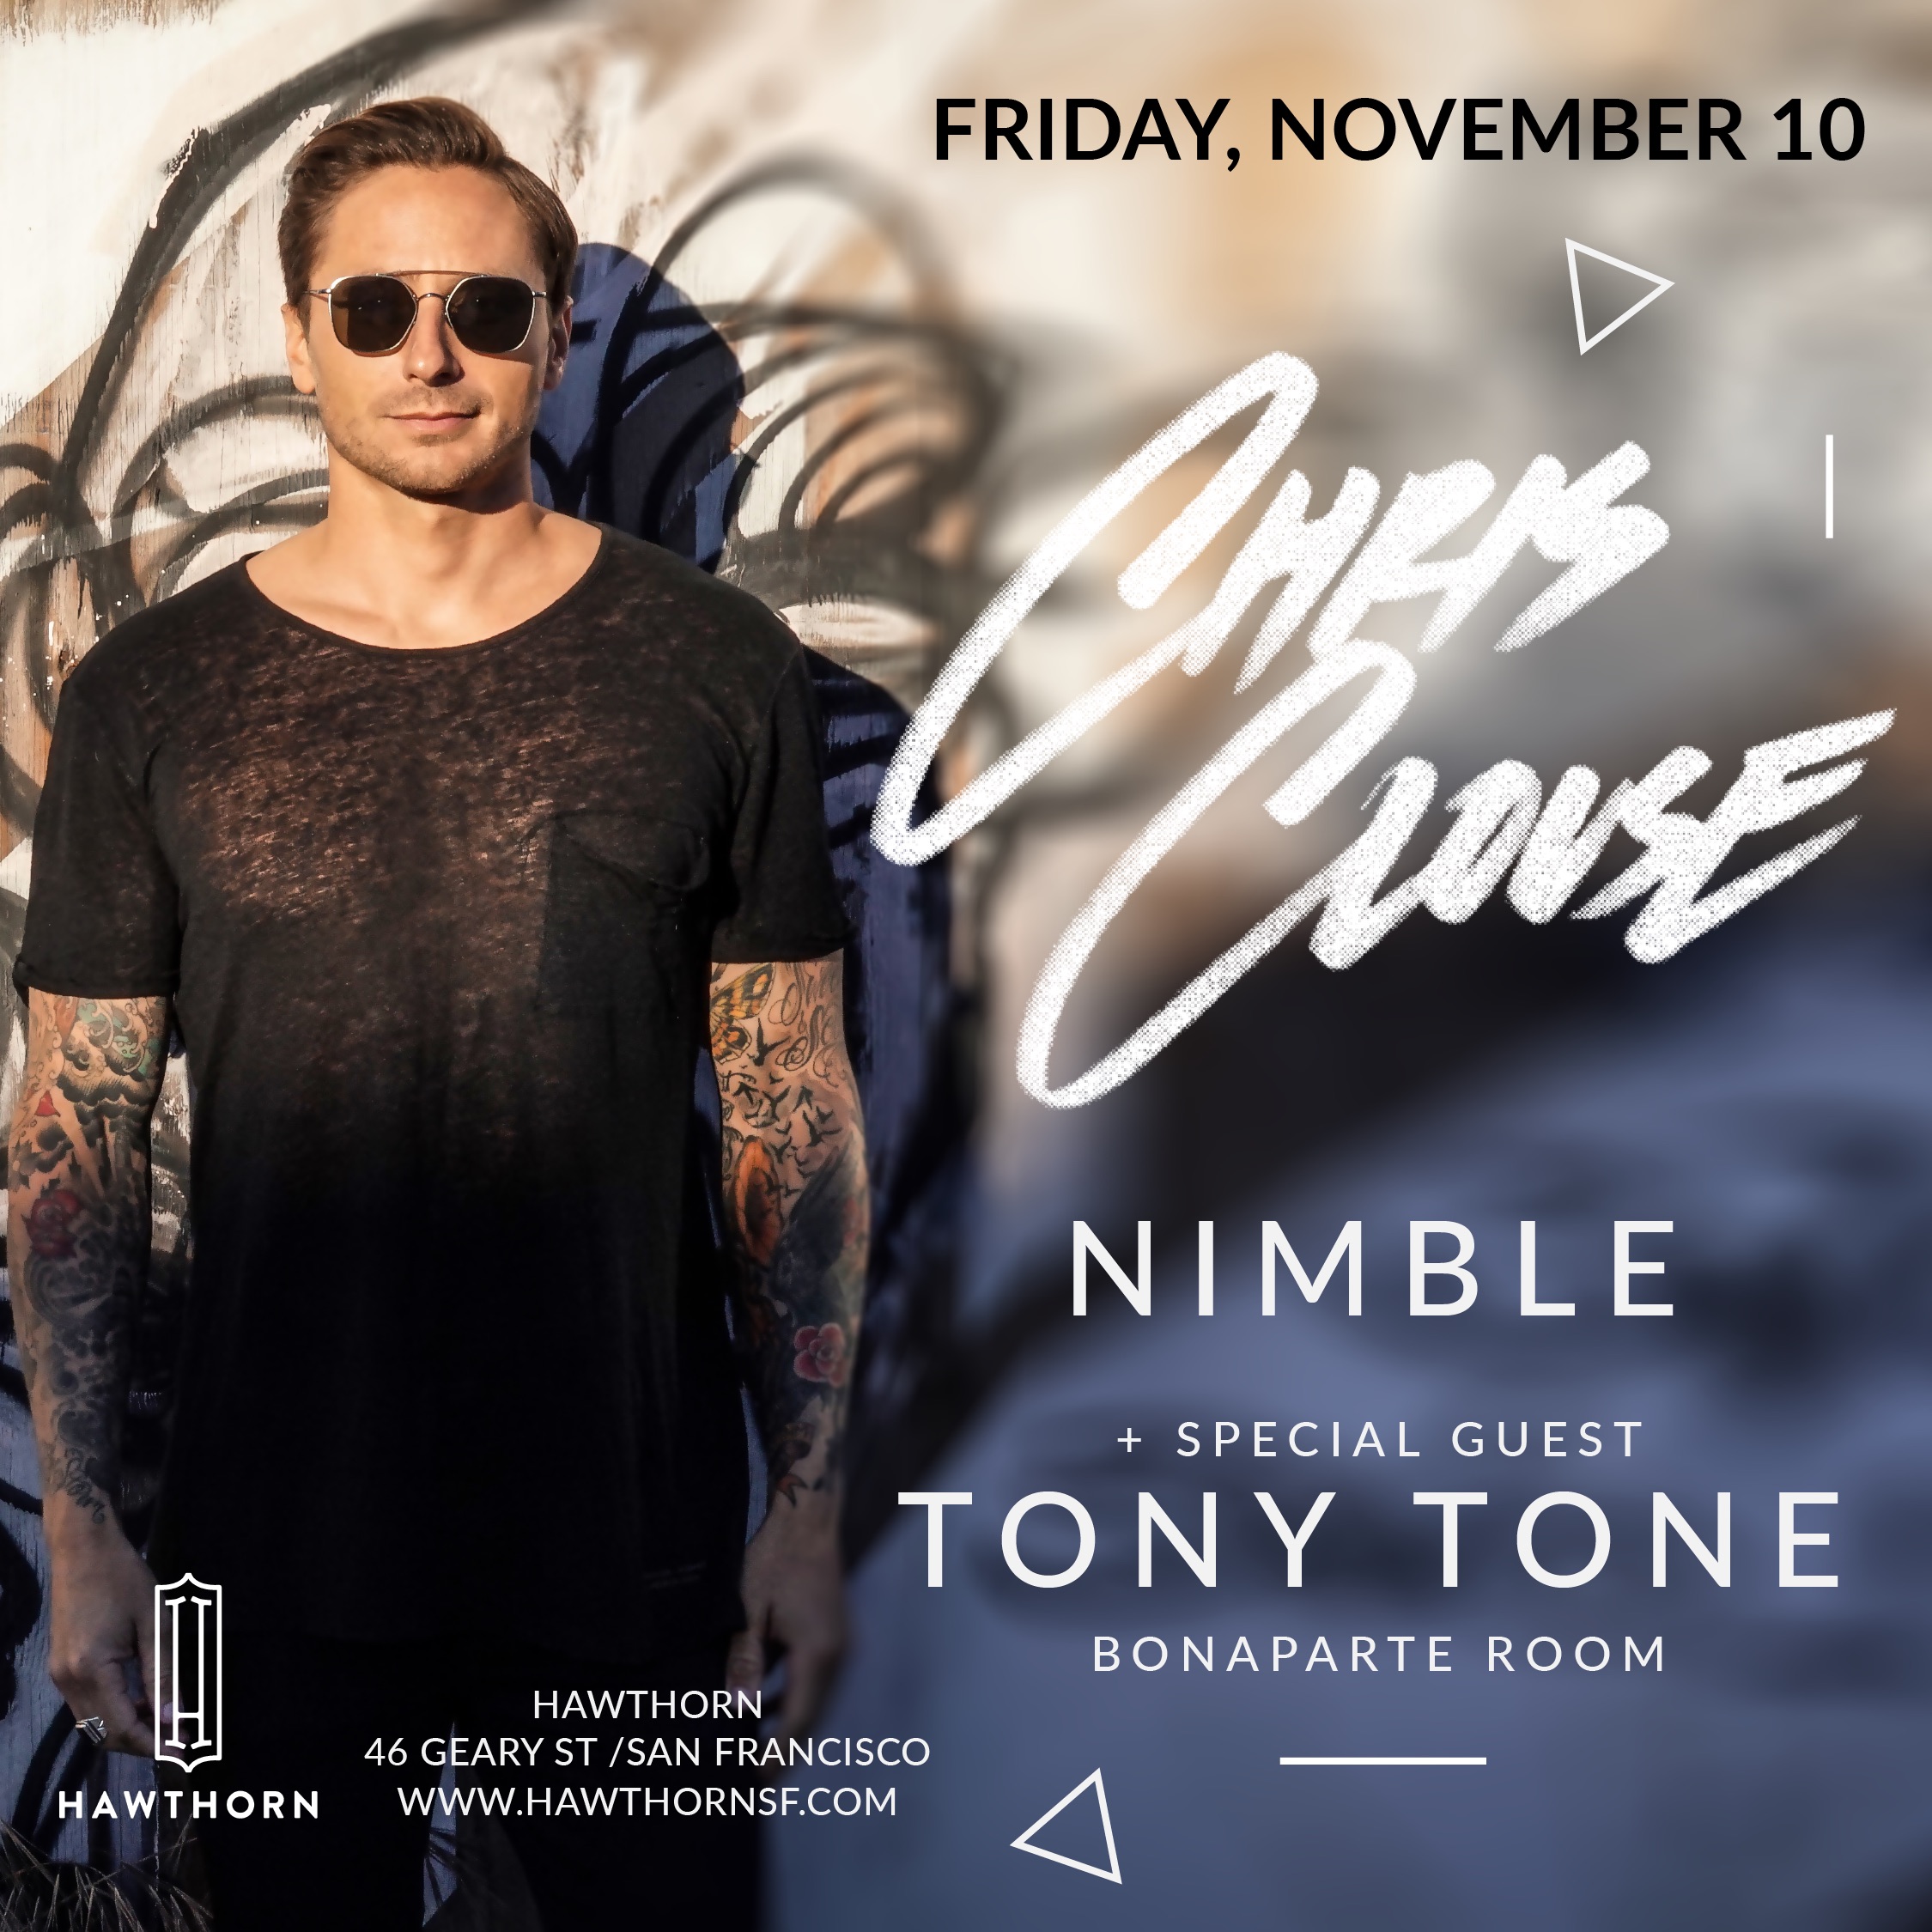 Chris Clouse, Nimble + TonyTone at Hawthorn in San Francisco - November ...